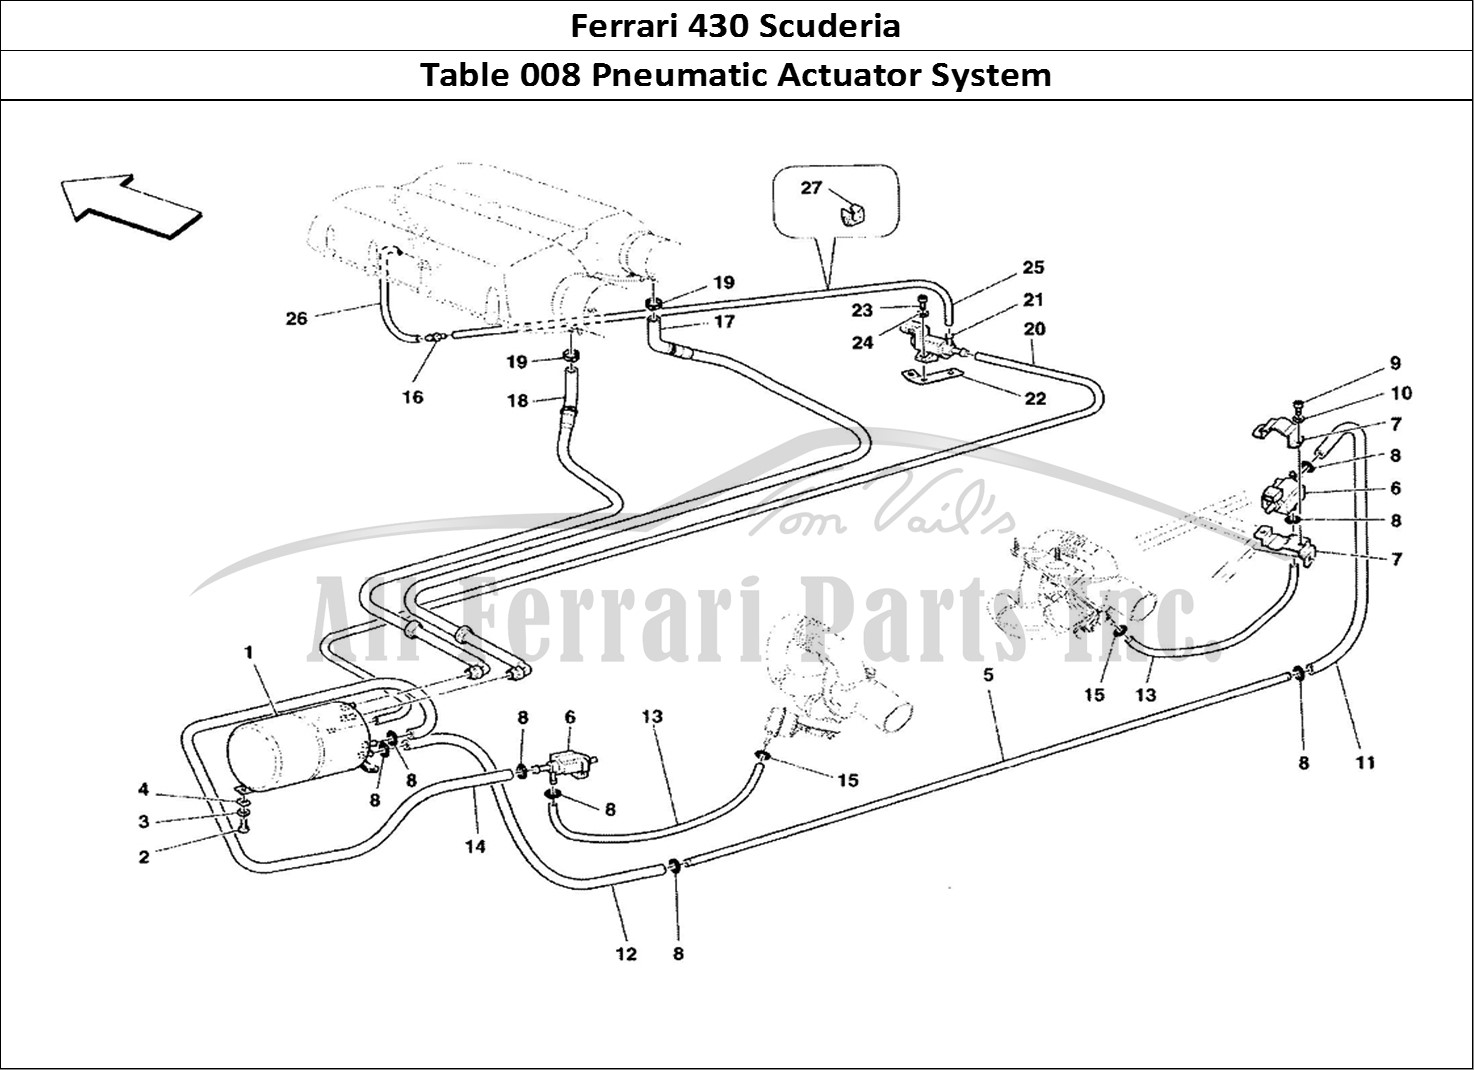 Ferrari Parts Ferrari 430 Scuderia Page 008 Pneumatics Actuator Syste